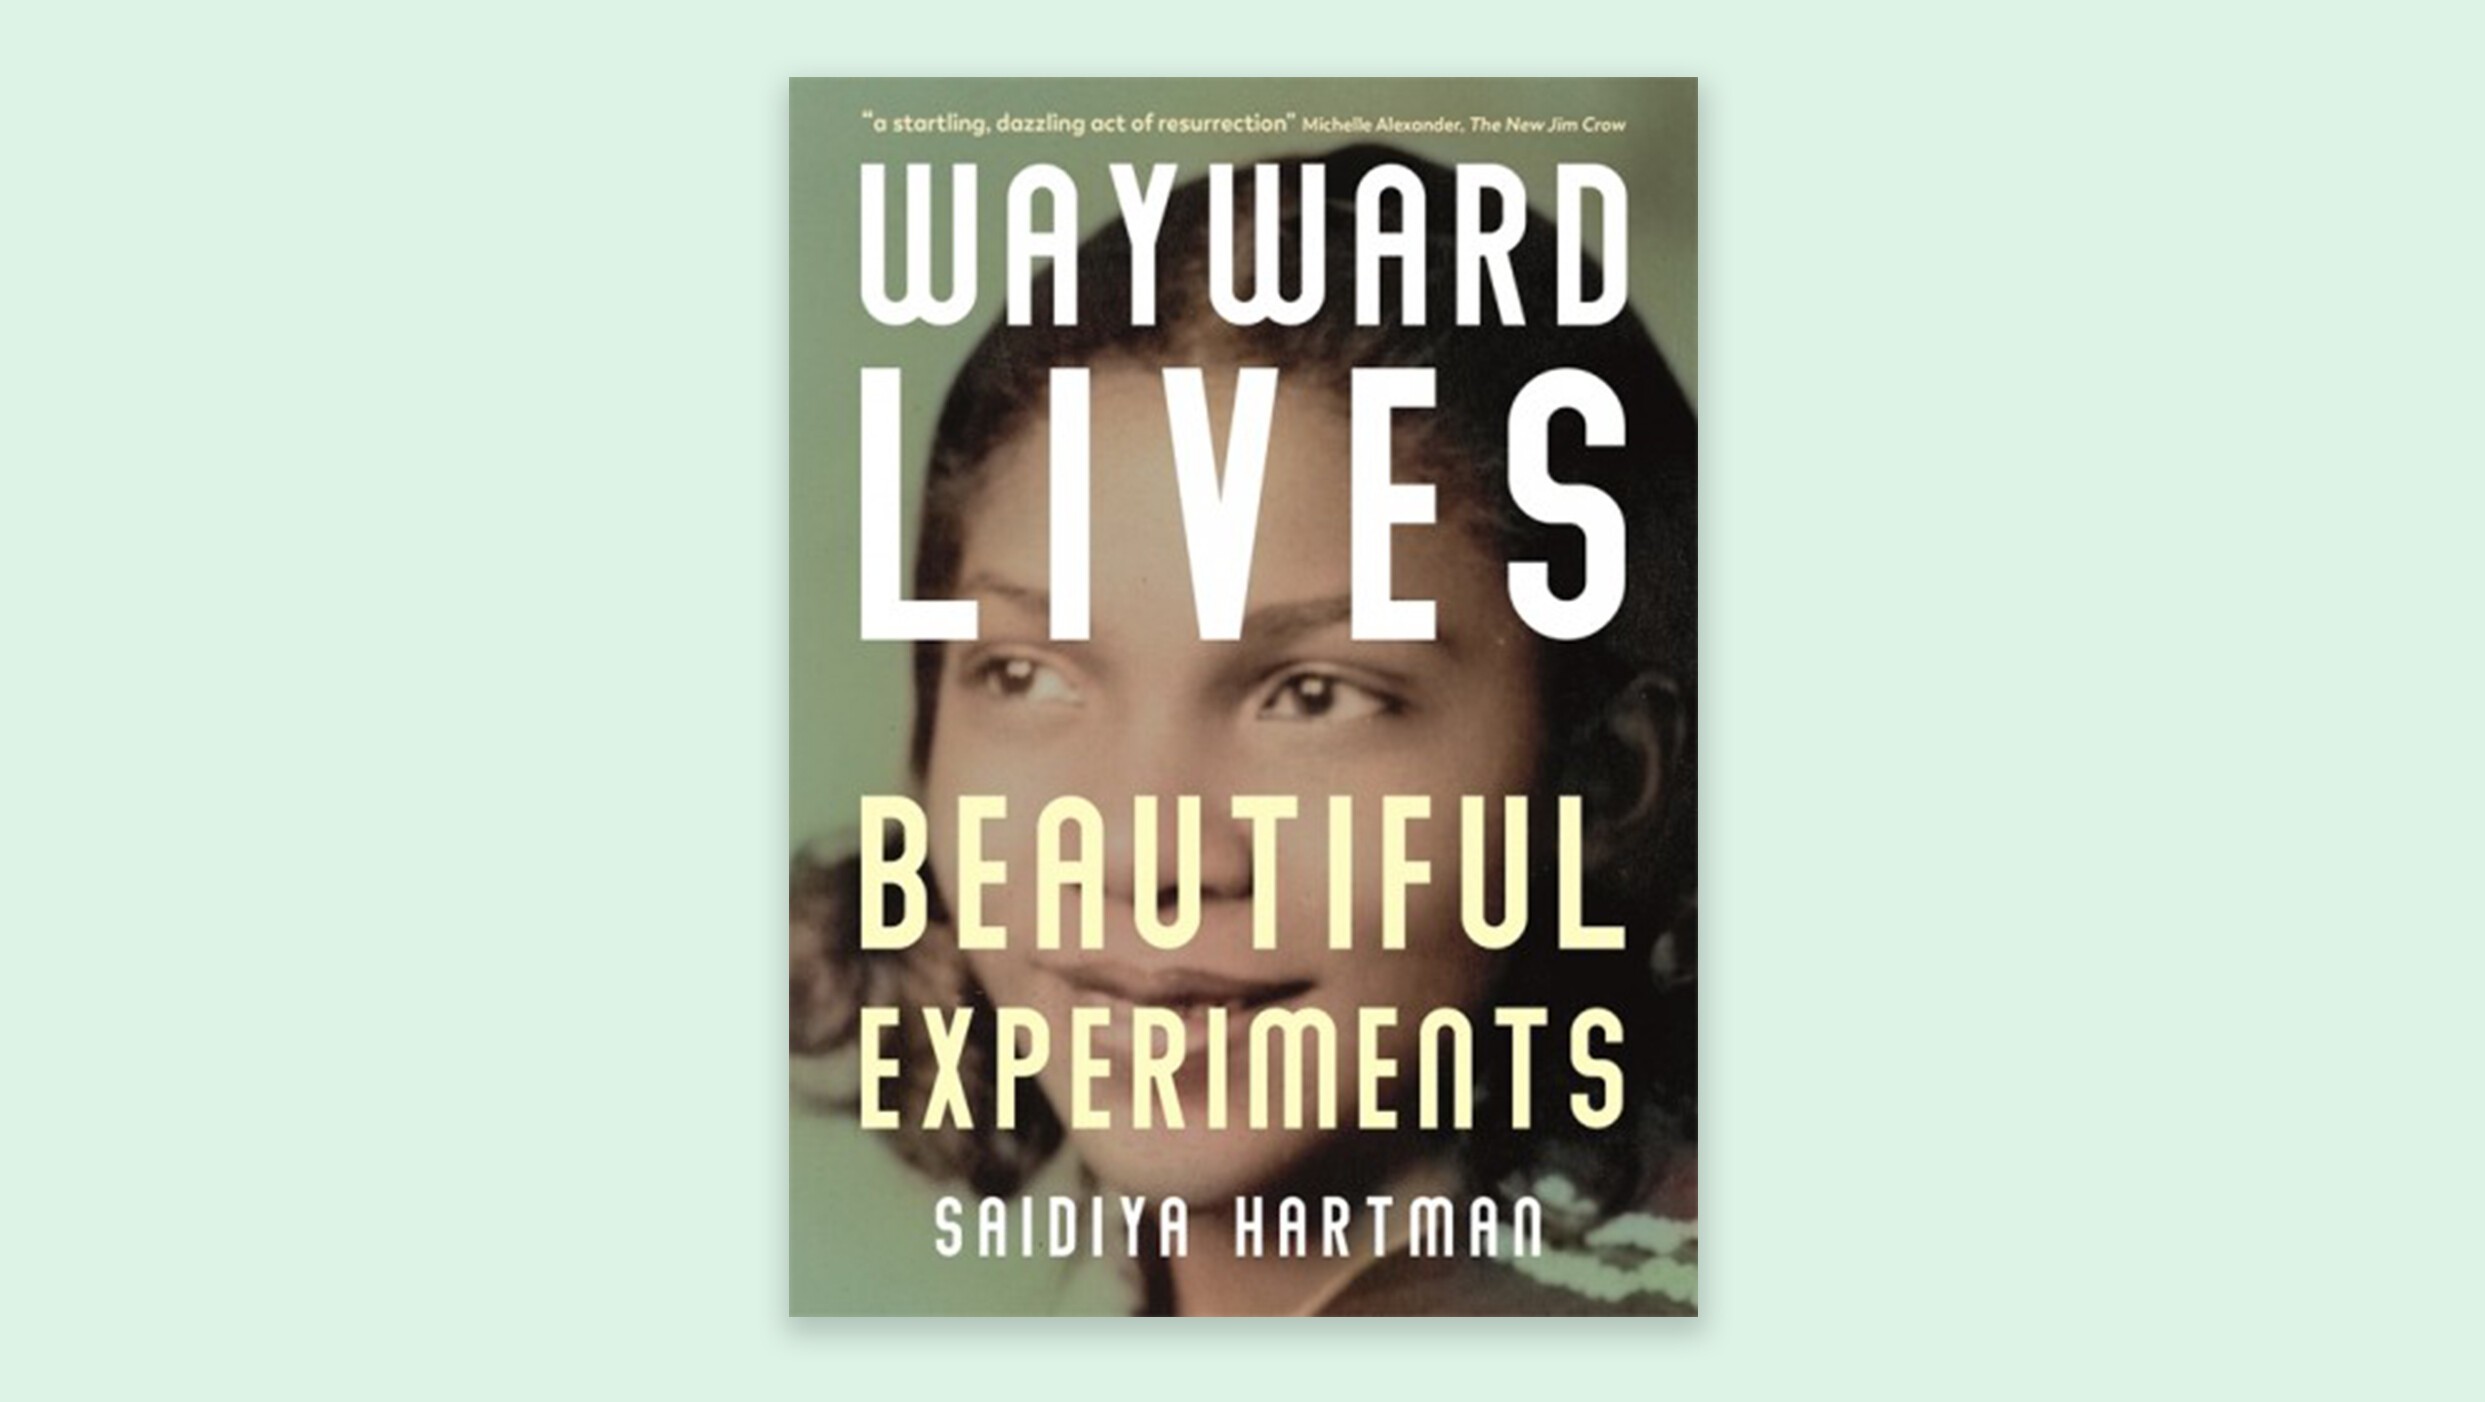 wayward lives beautiful experiments by saidiya hartman